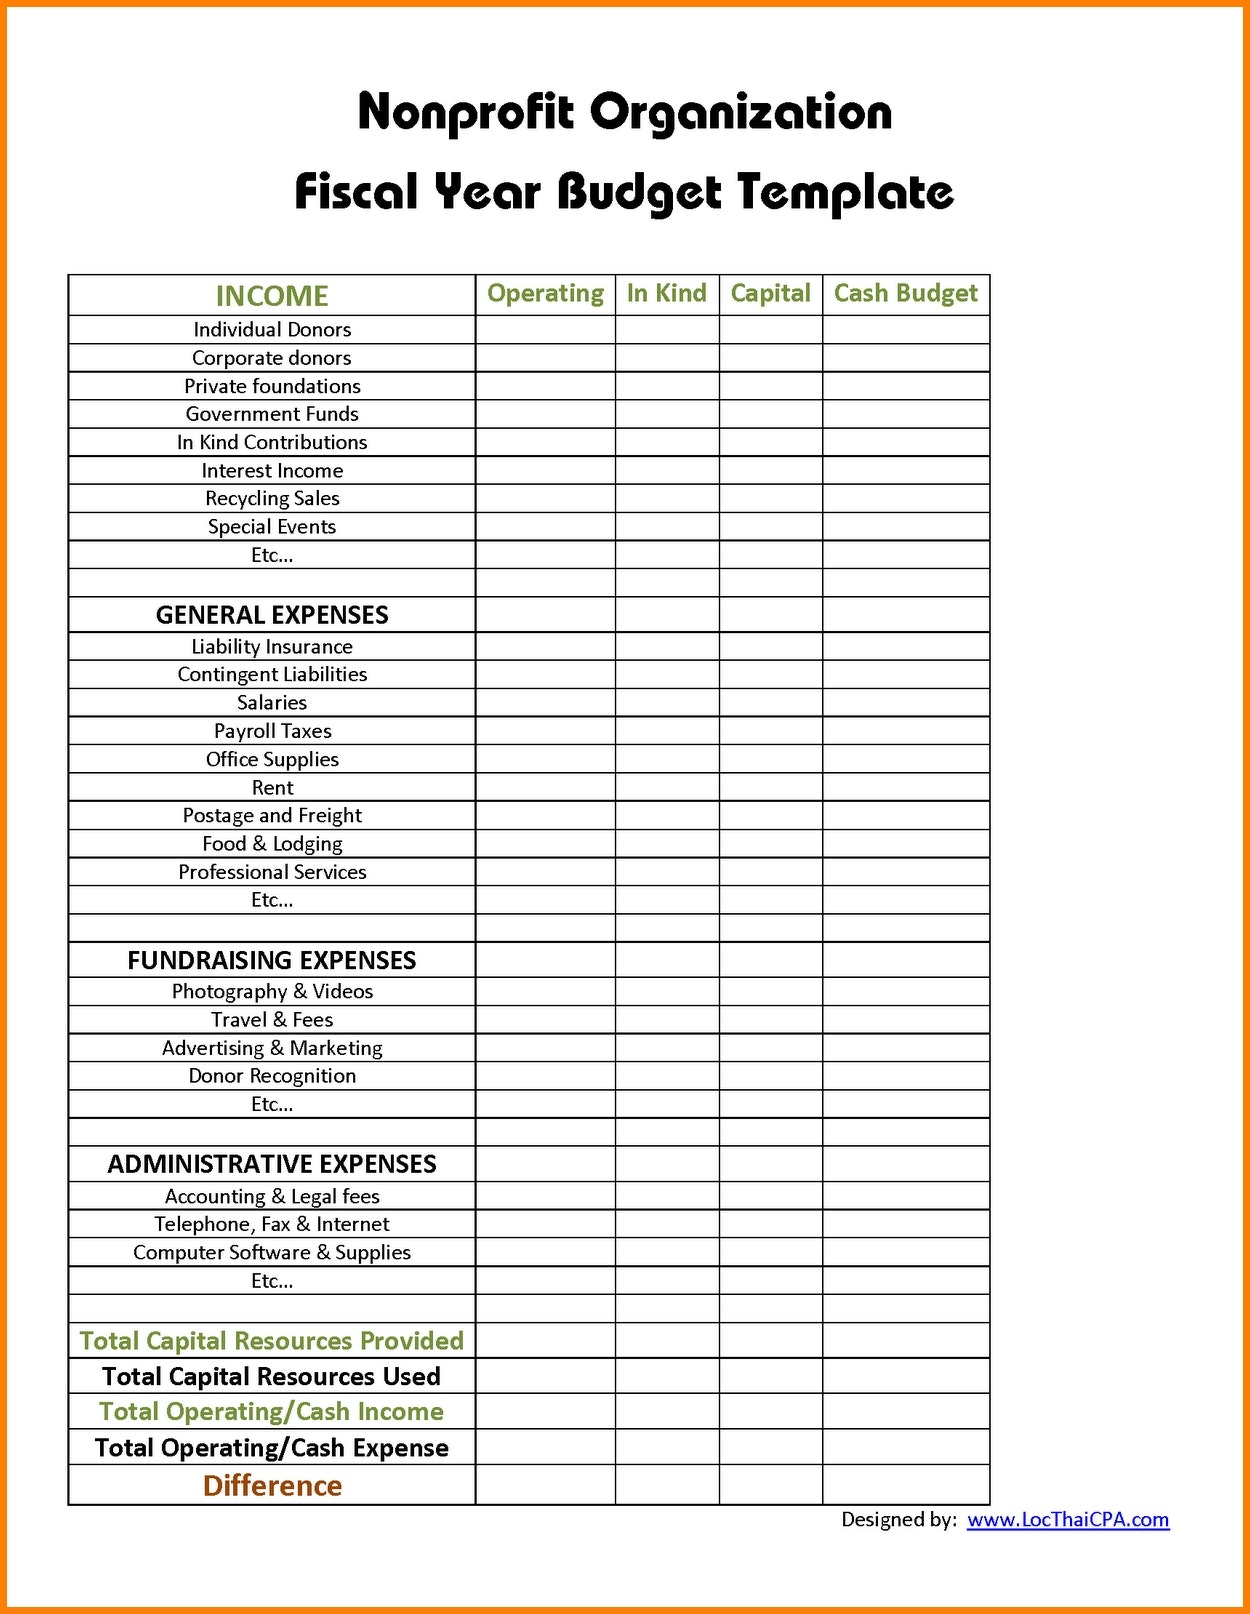 budget non profit organization   Physic.minimalistics.co